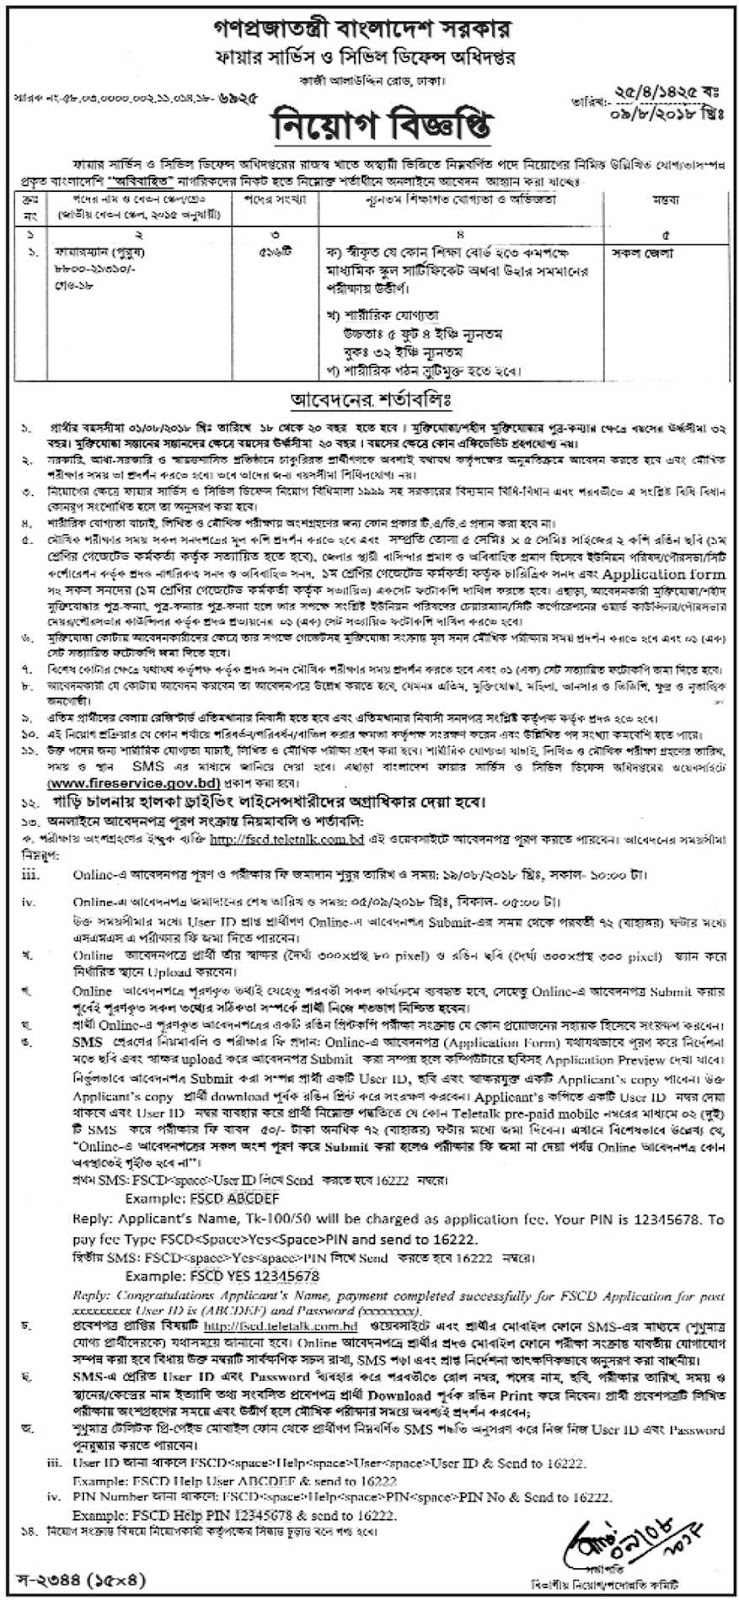 Bangladesh Fire Service and Civil Defense (BFSCD) Job Circular 2018